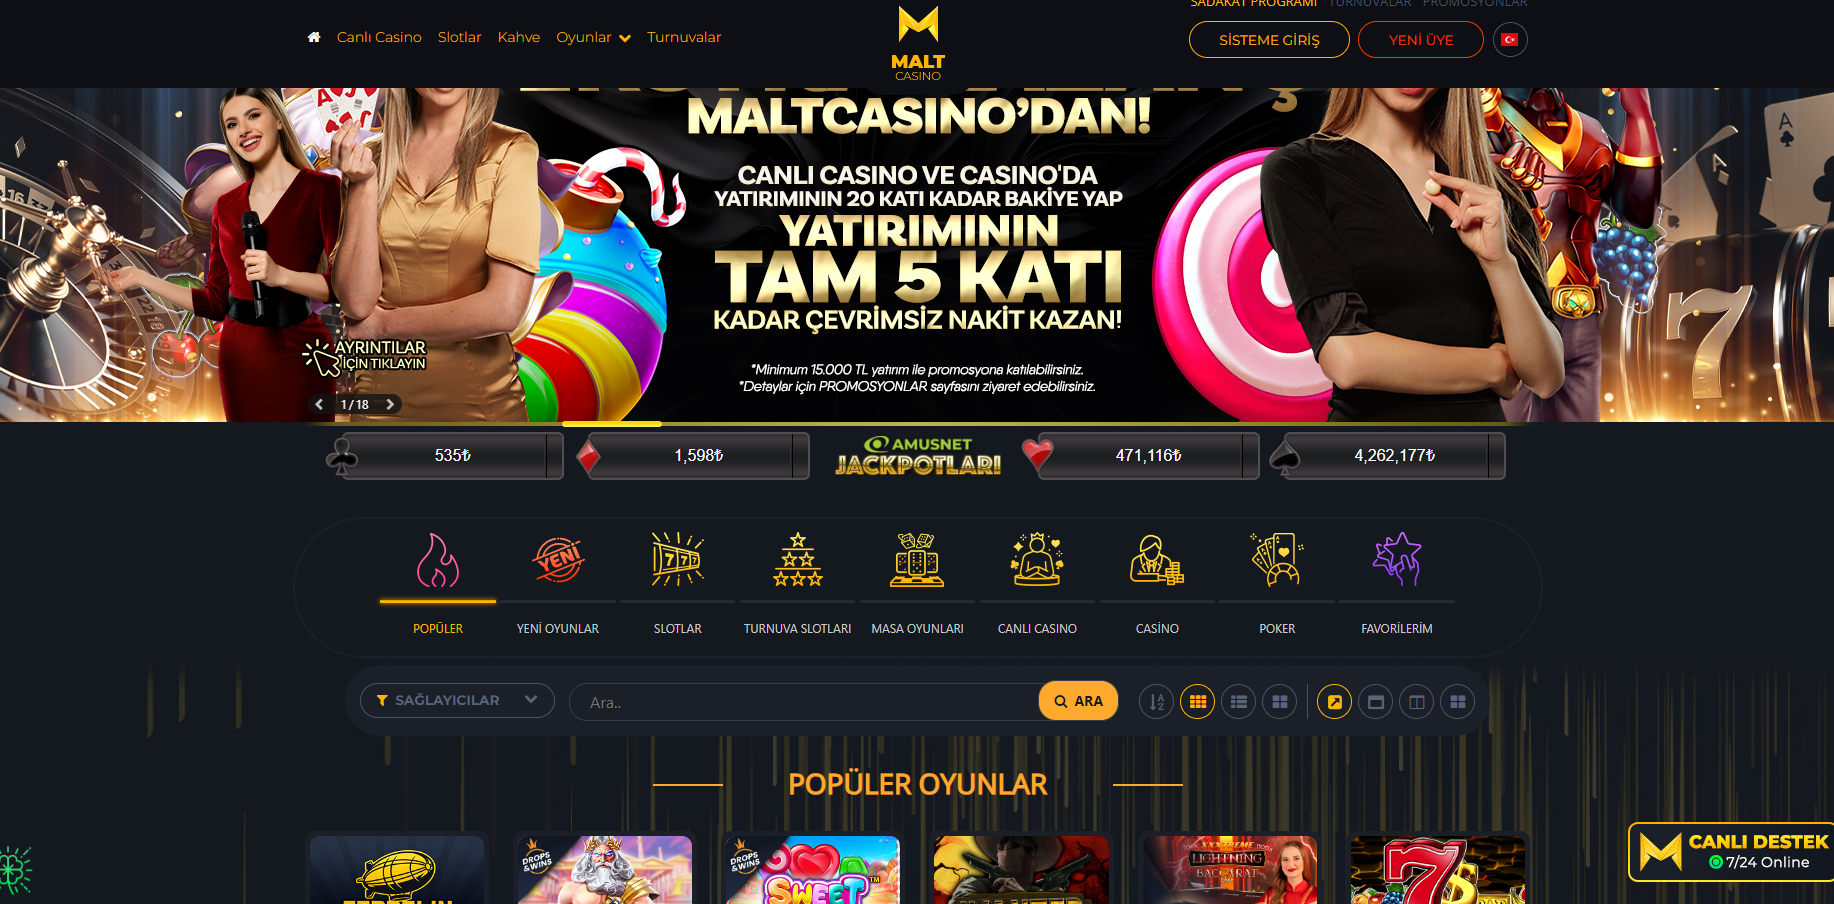 Malt Casino